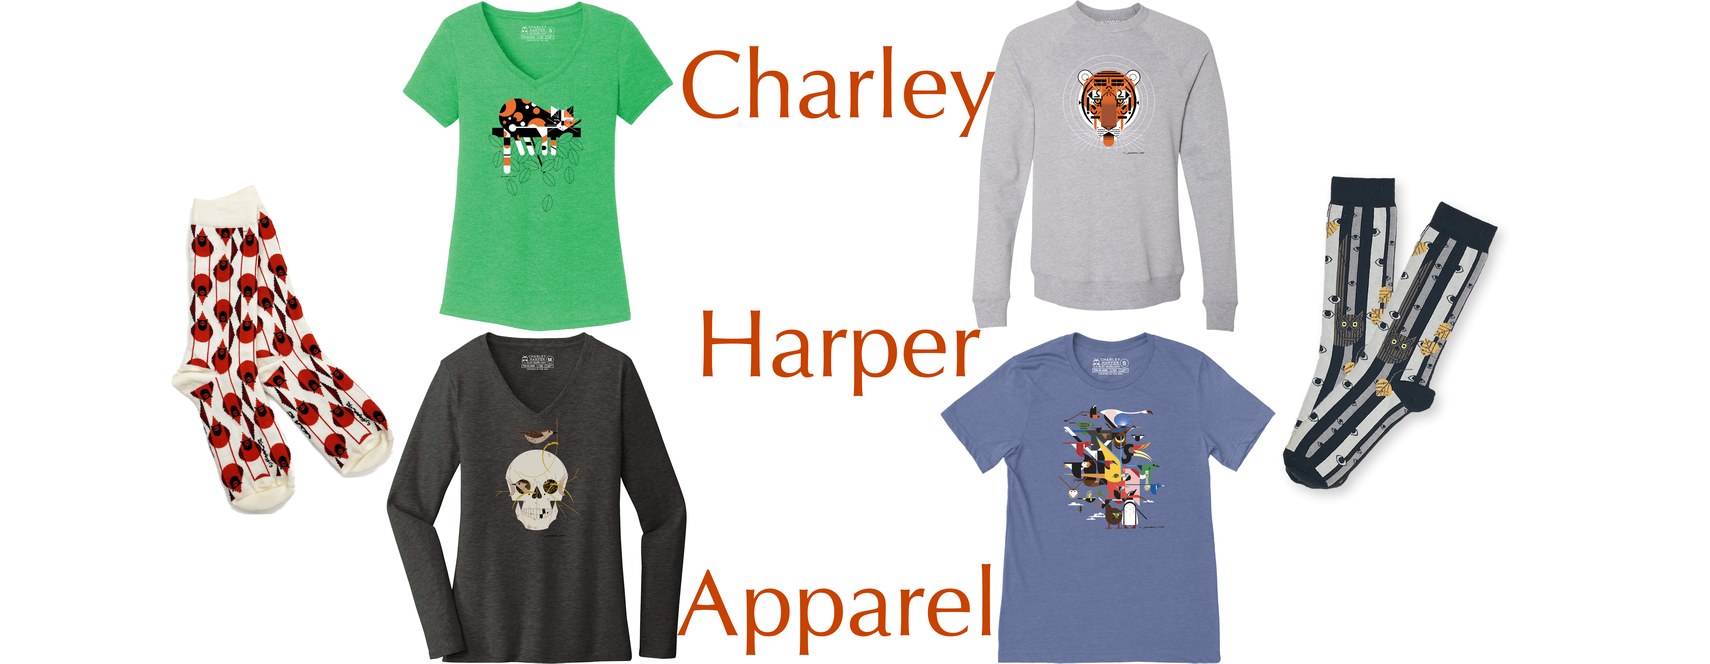 Charley Harper Apparel